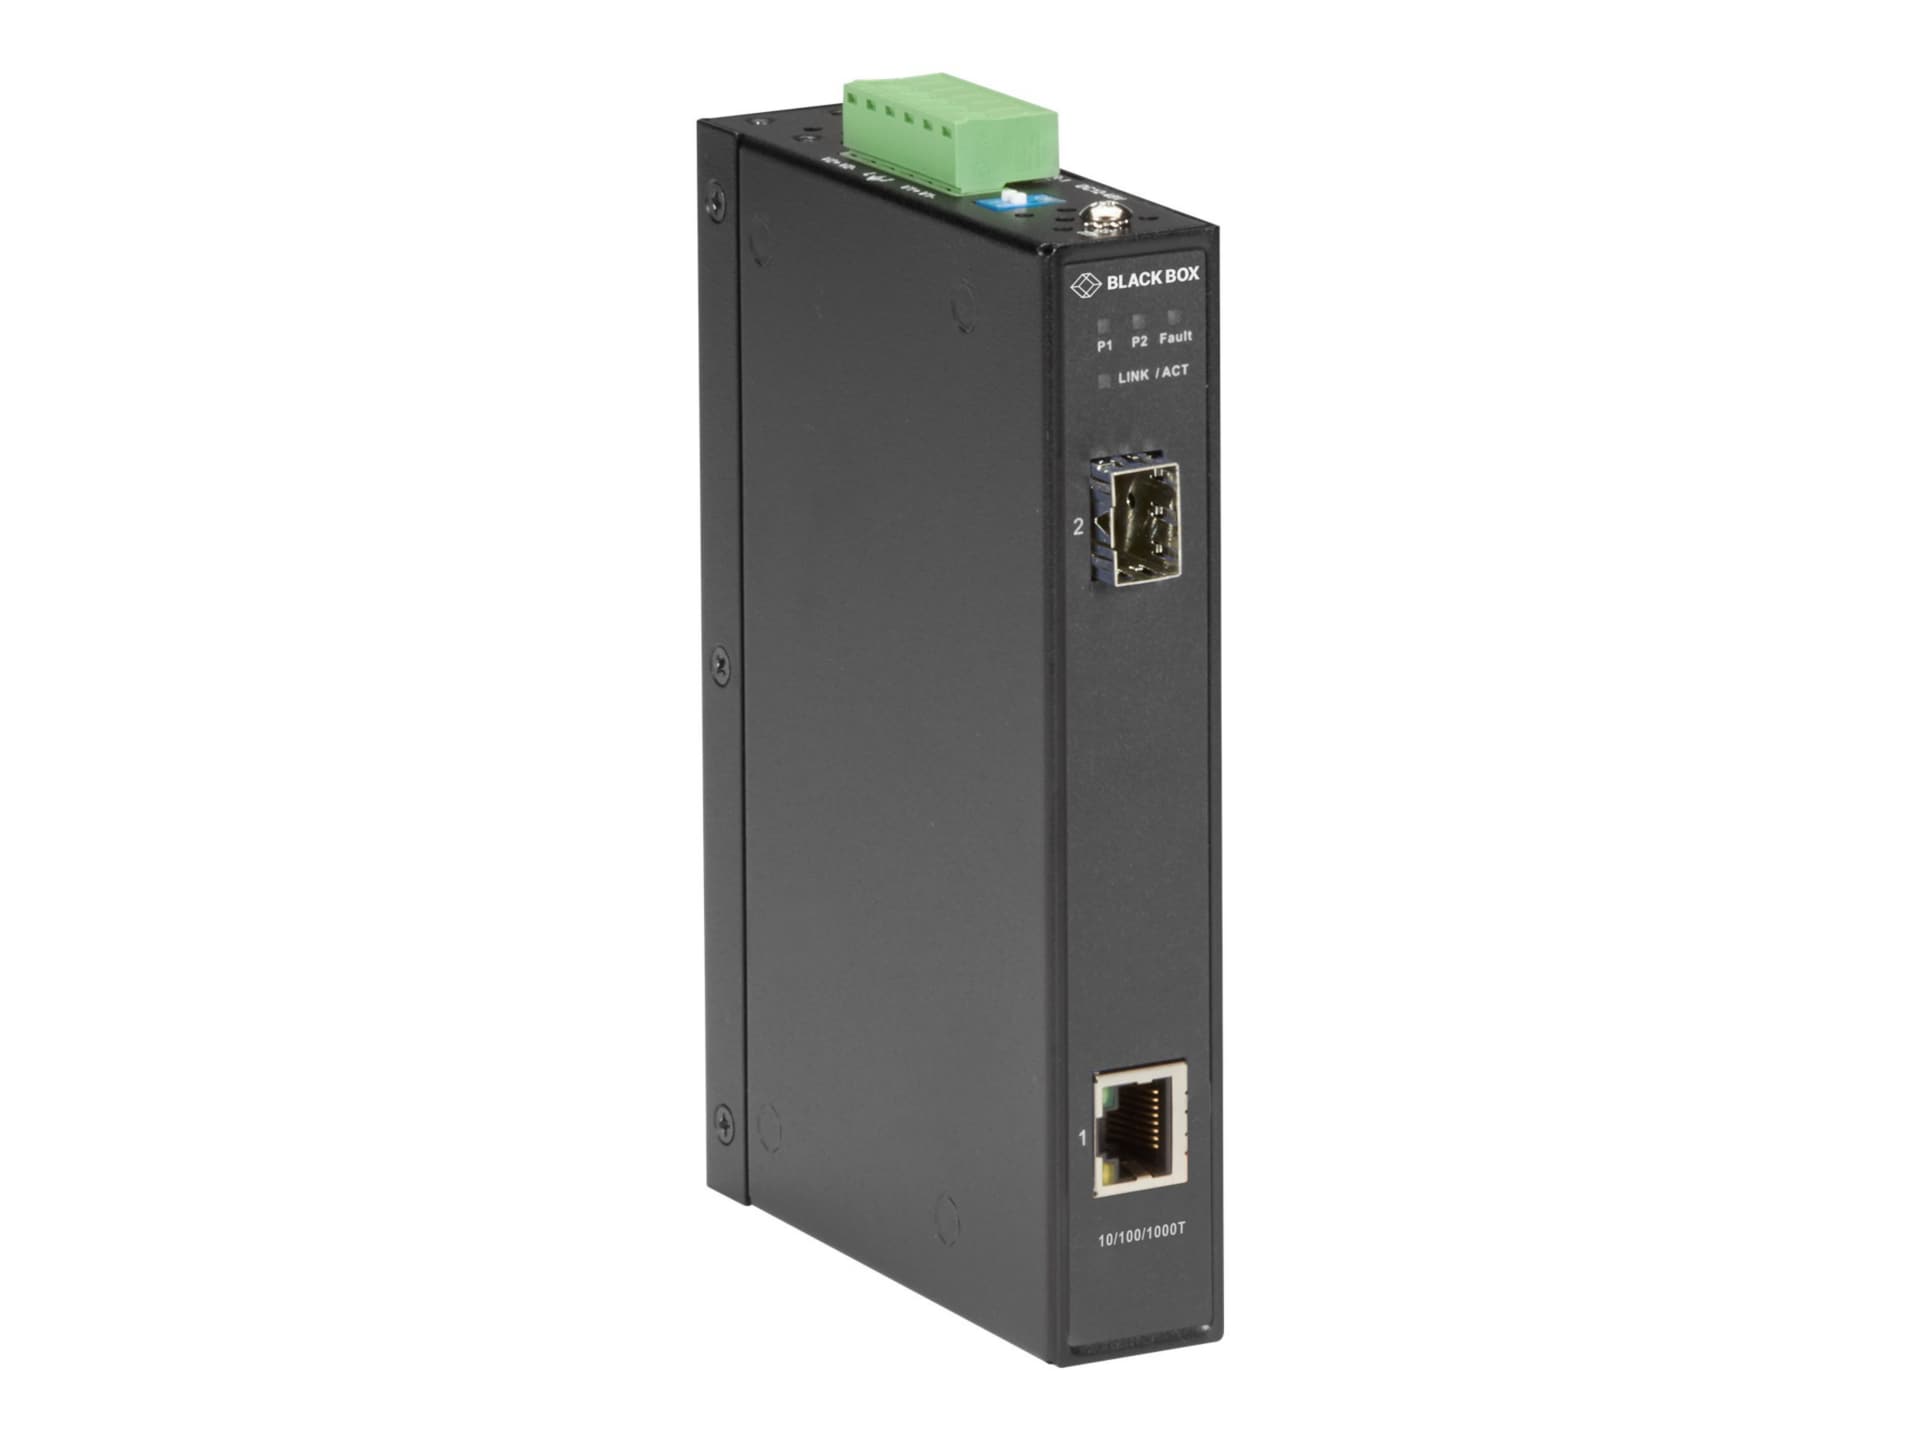 Black Box LGC280 Series LGC280A - fiber media converter - 10Mb LAN, 100Mb LAN, GigE - TAA Compliant